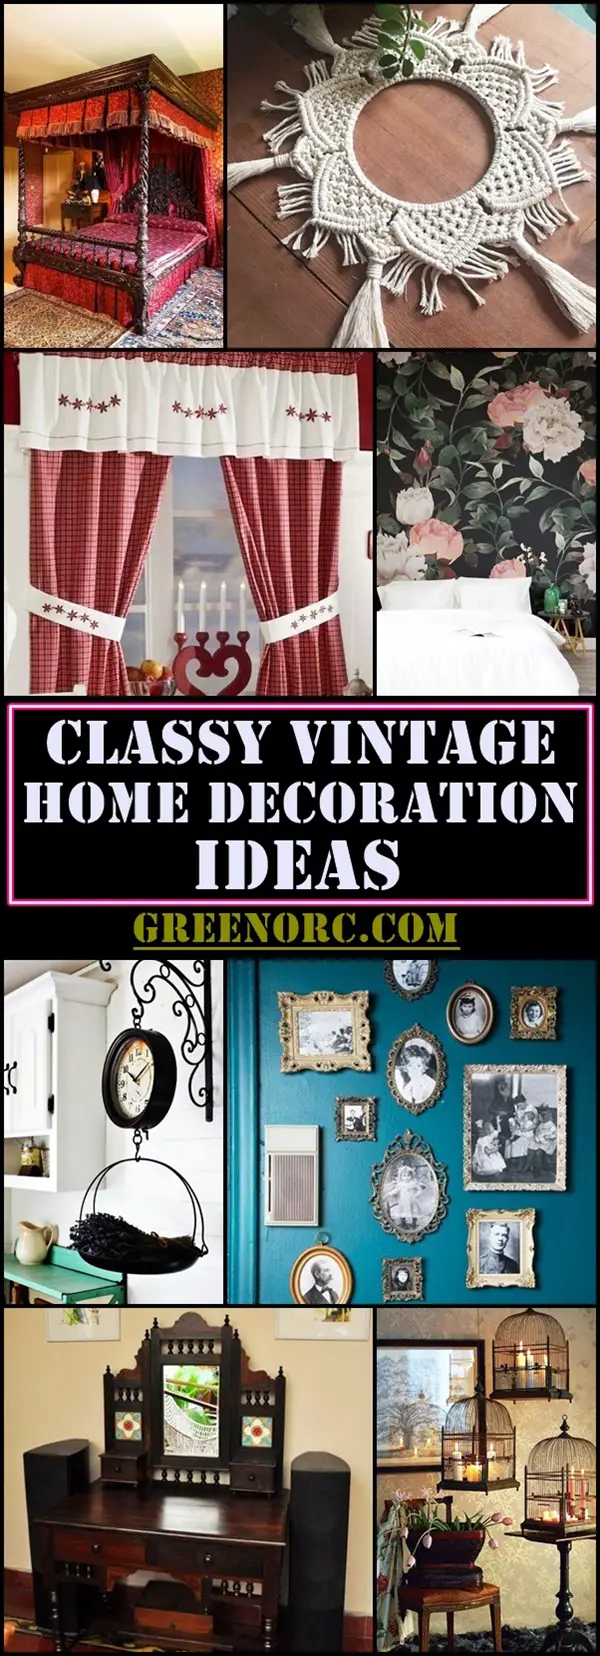 Classy Vintage Home Decoration Ideas